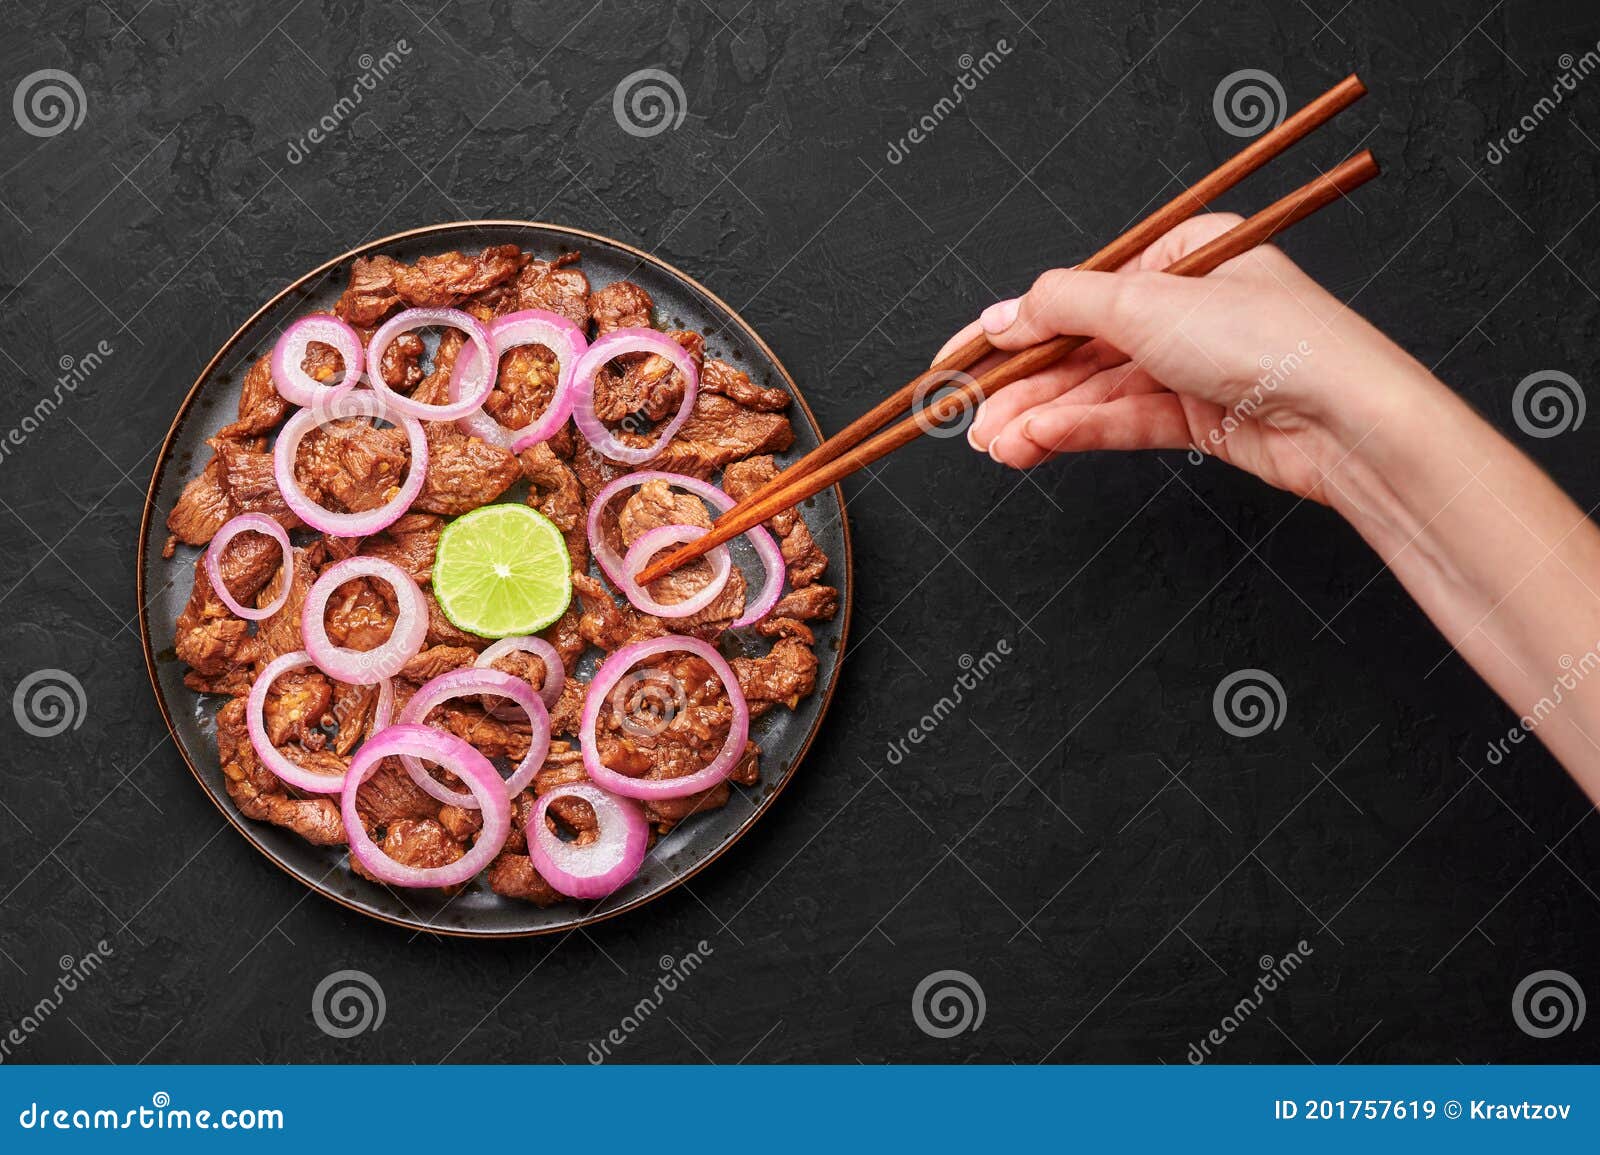 bistek tagalog or bistec encebollado on black plate on slate table top. filipino spanish cuisine beef steak with onion